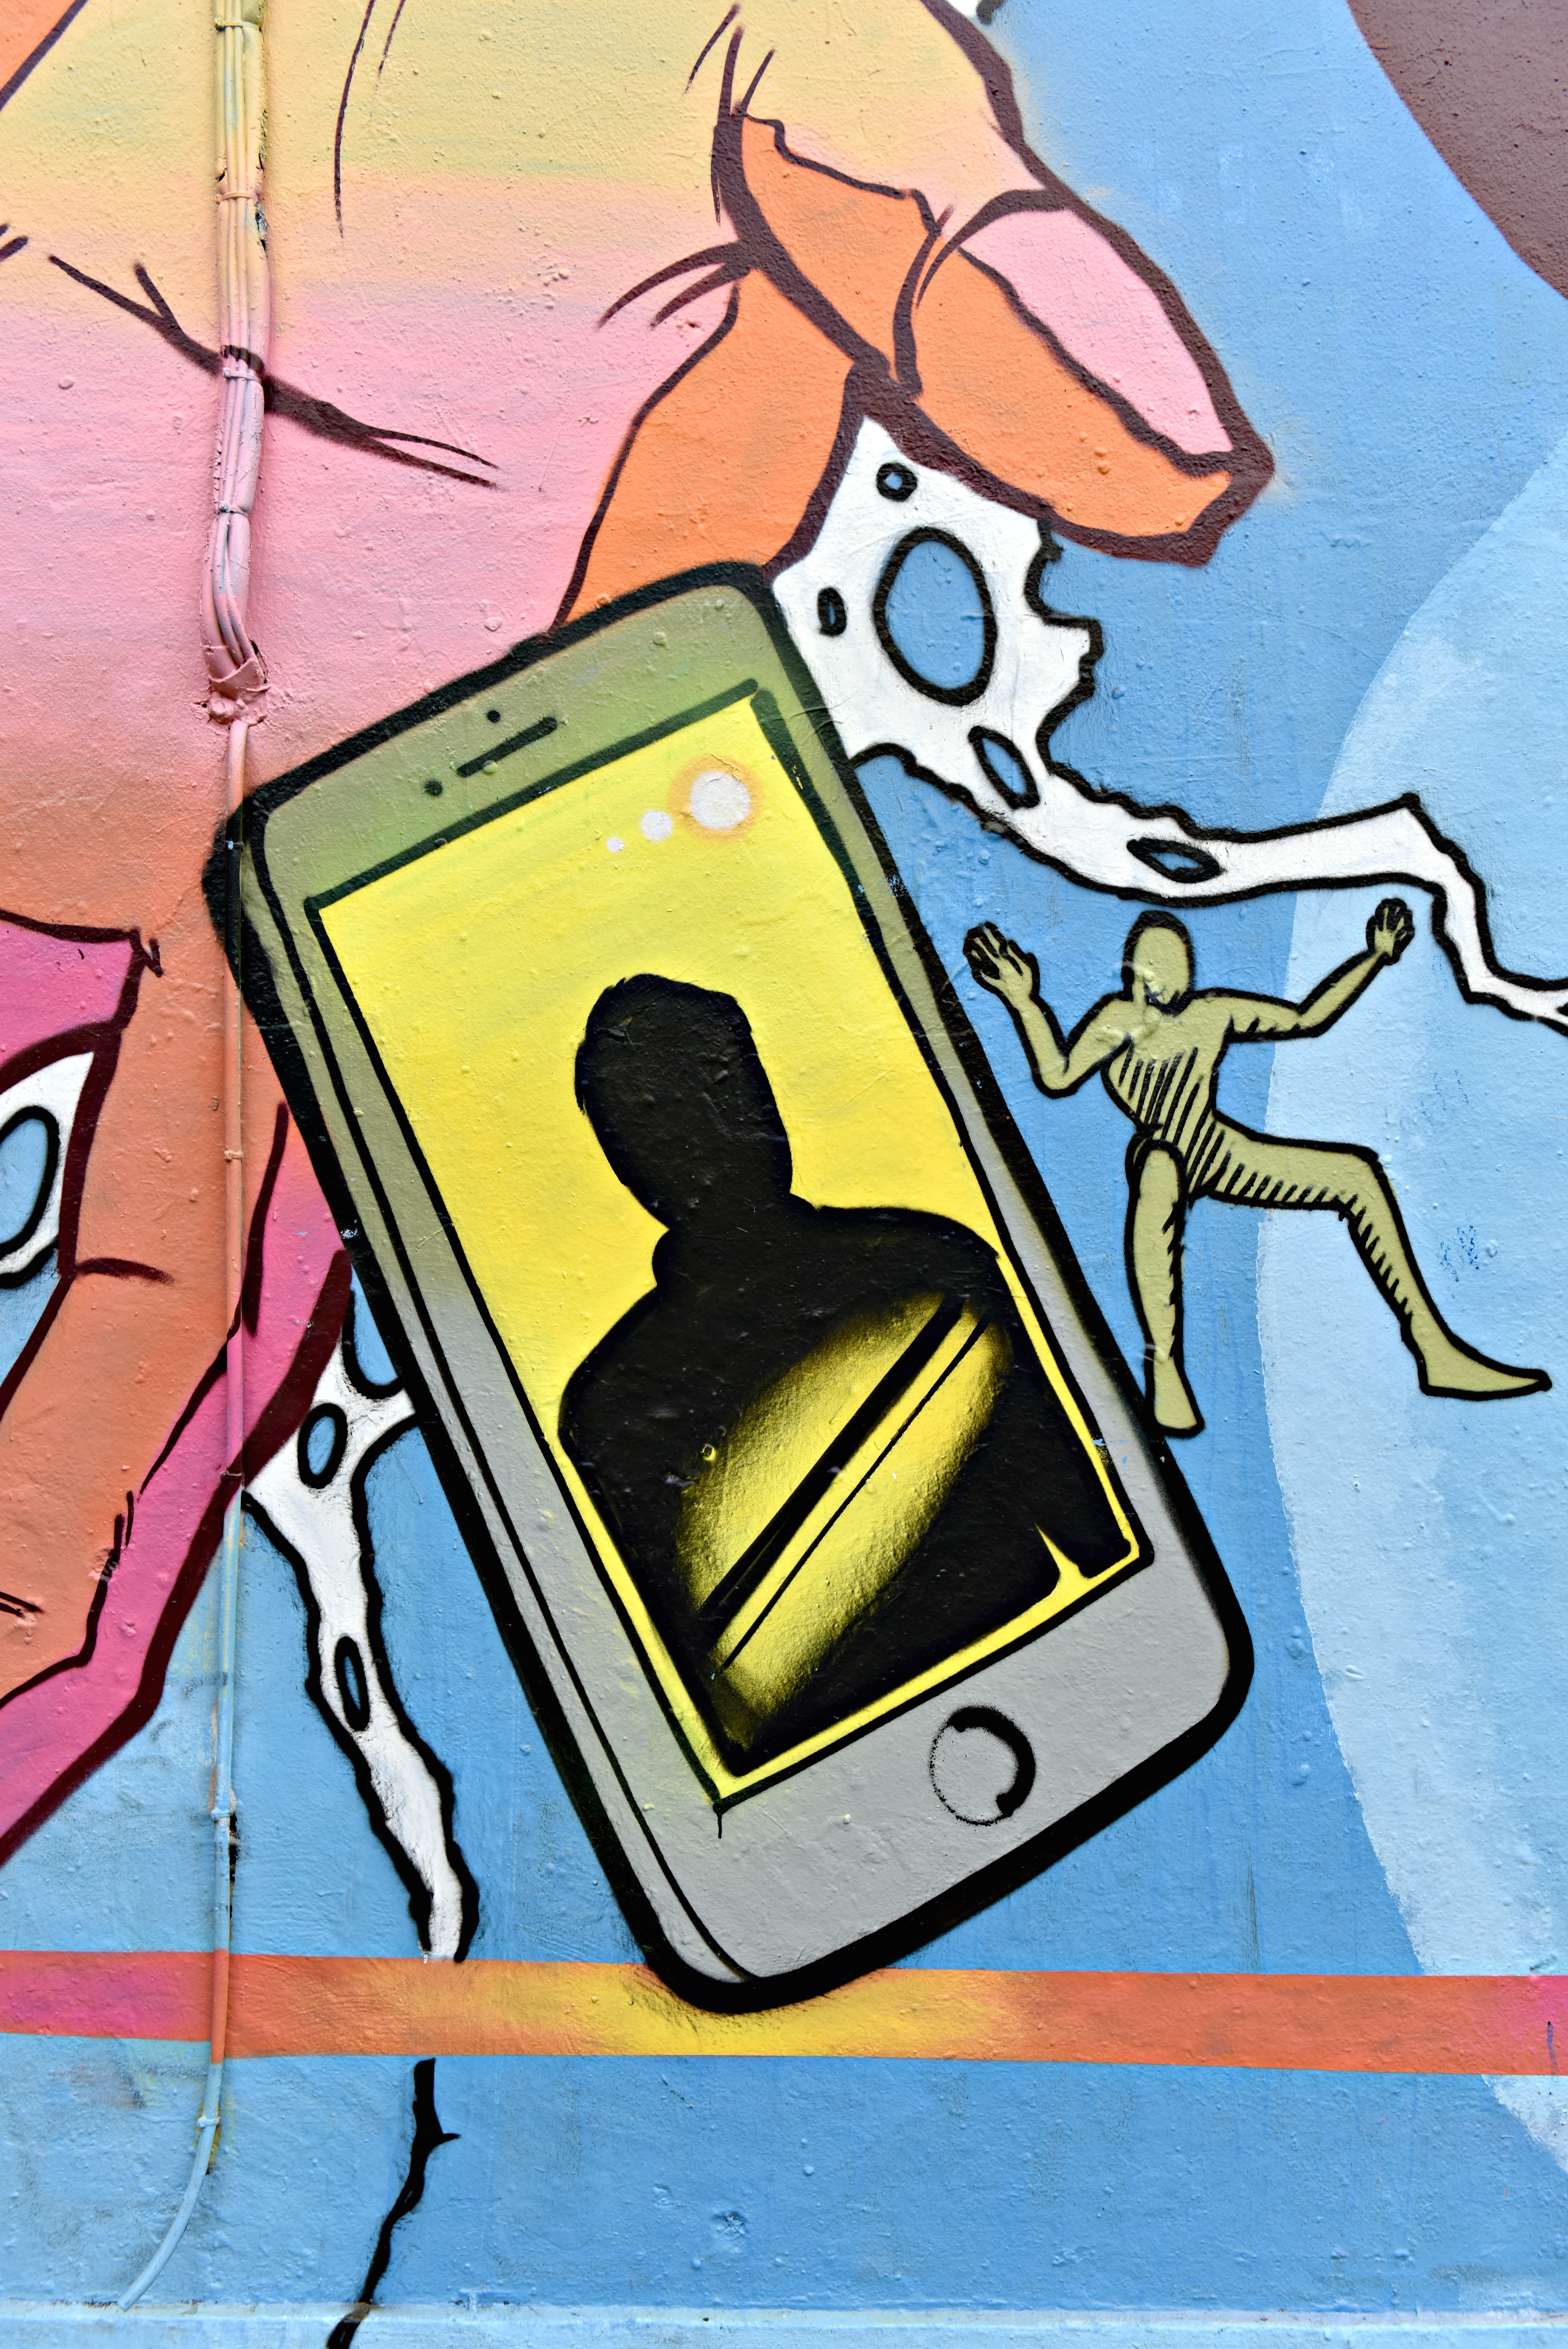 <img src="ana.jpg" alt="ana smartphone street art"> 